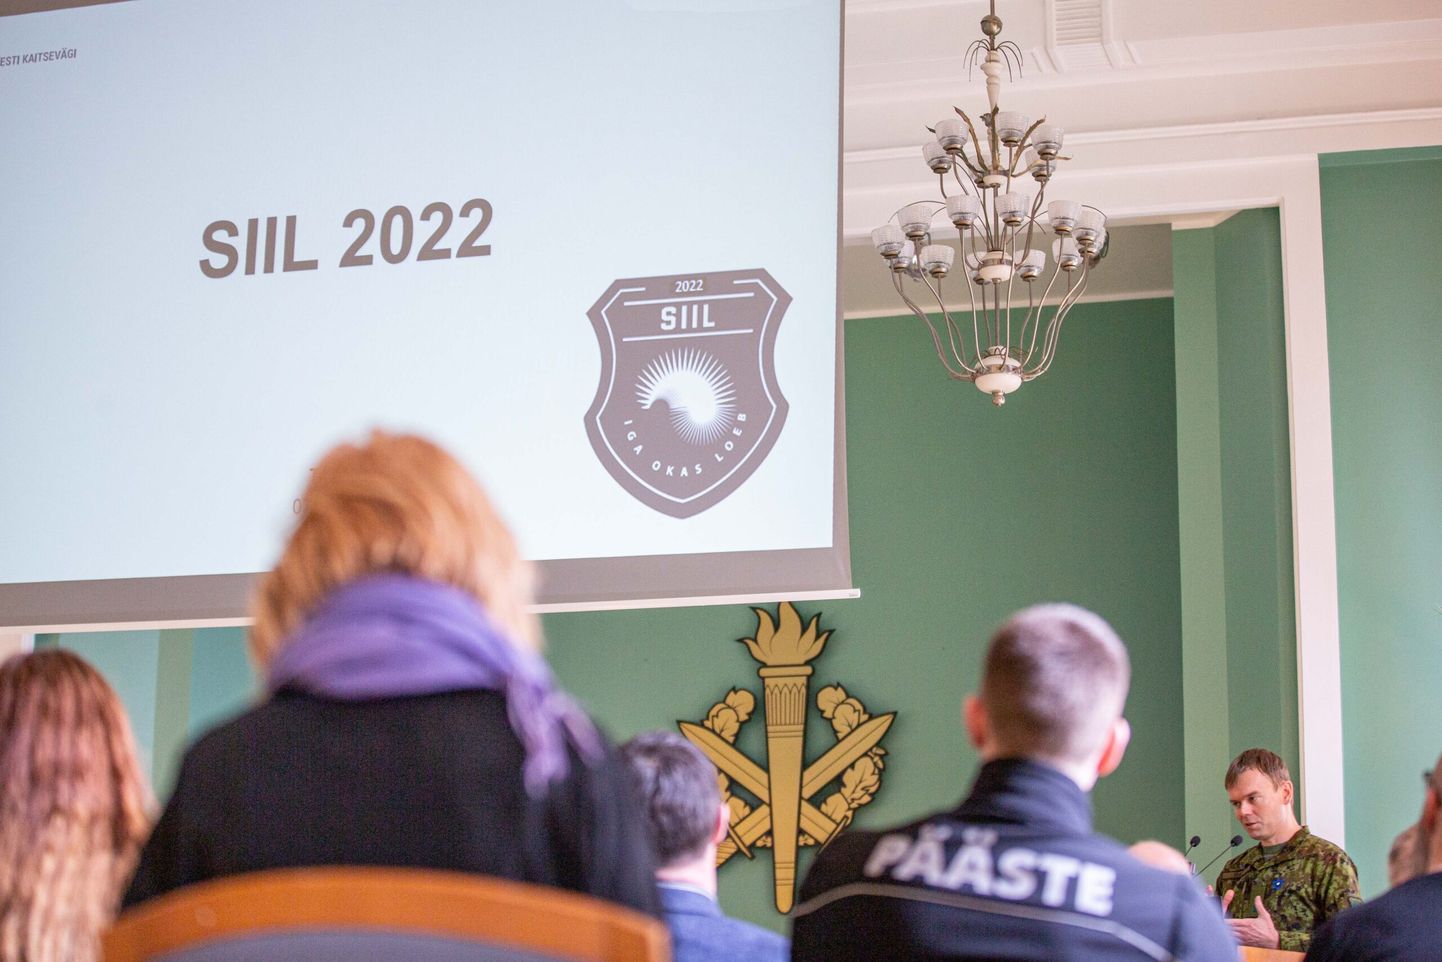 Tartus kaitseväe akadeemias toimus suurõppuse Siil 2022 infotund kaitseväe tsiviilkoostööpartneritele Lõuna-Eestis.